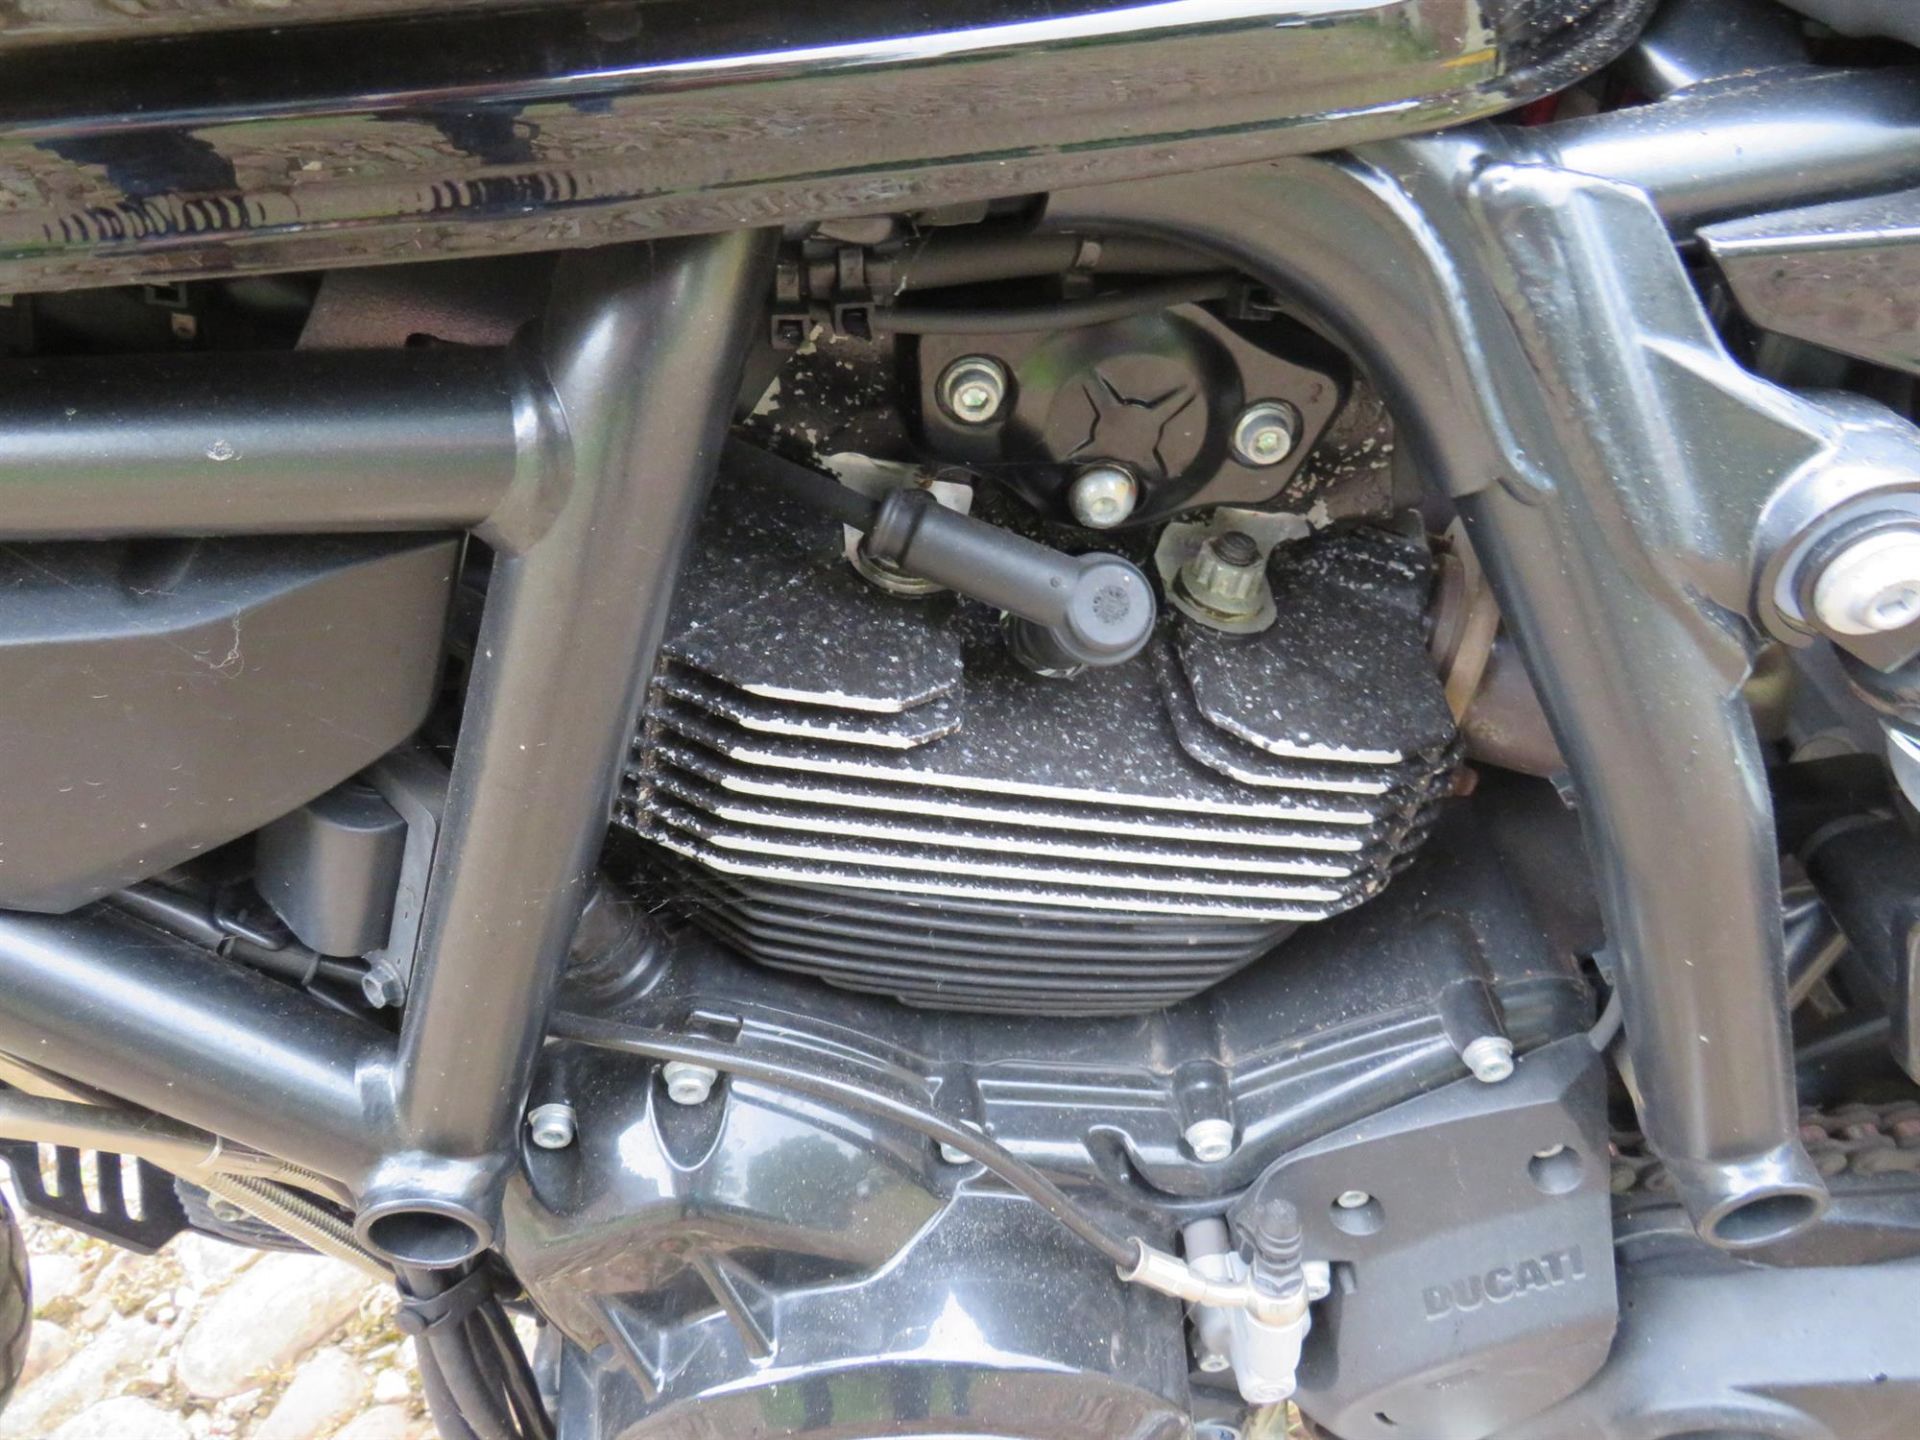 2019 Ducati Scrambler Full Throttle 803cc - Image 7 of 10